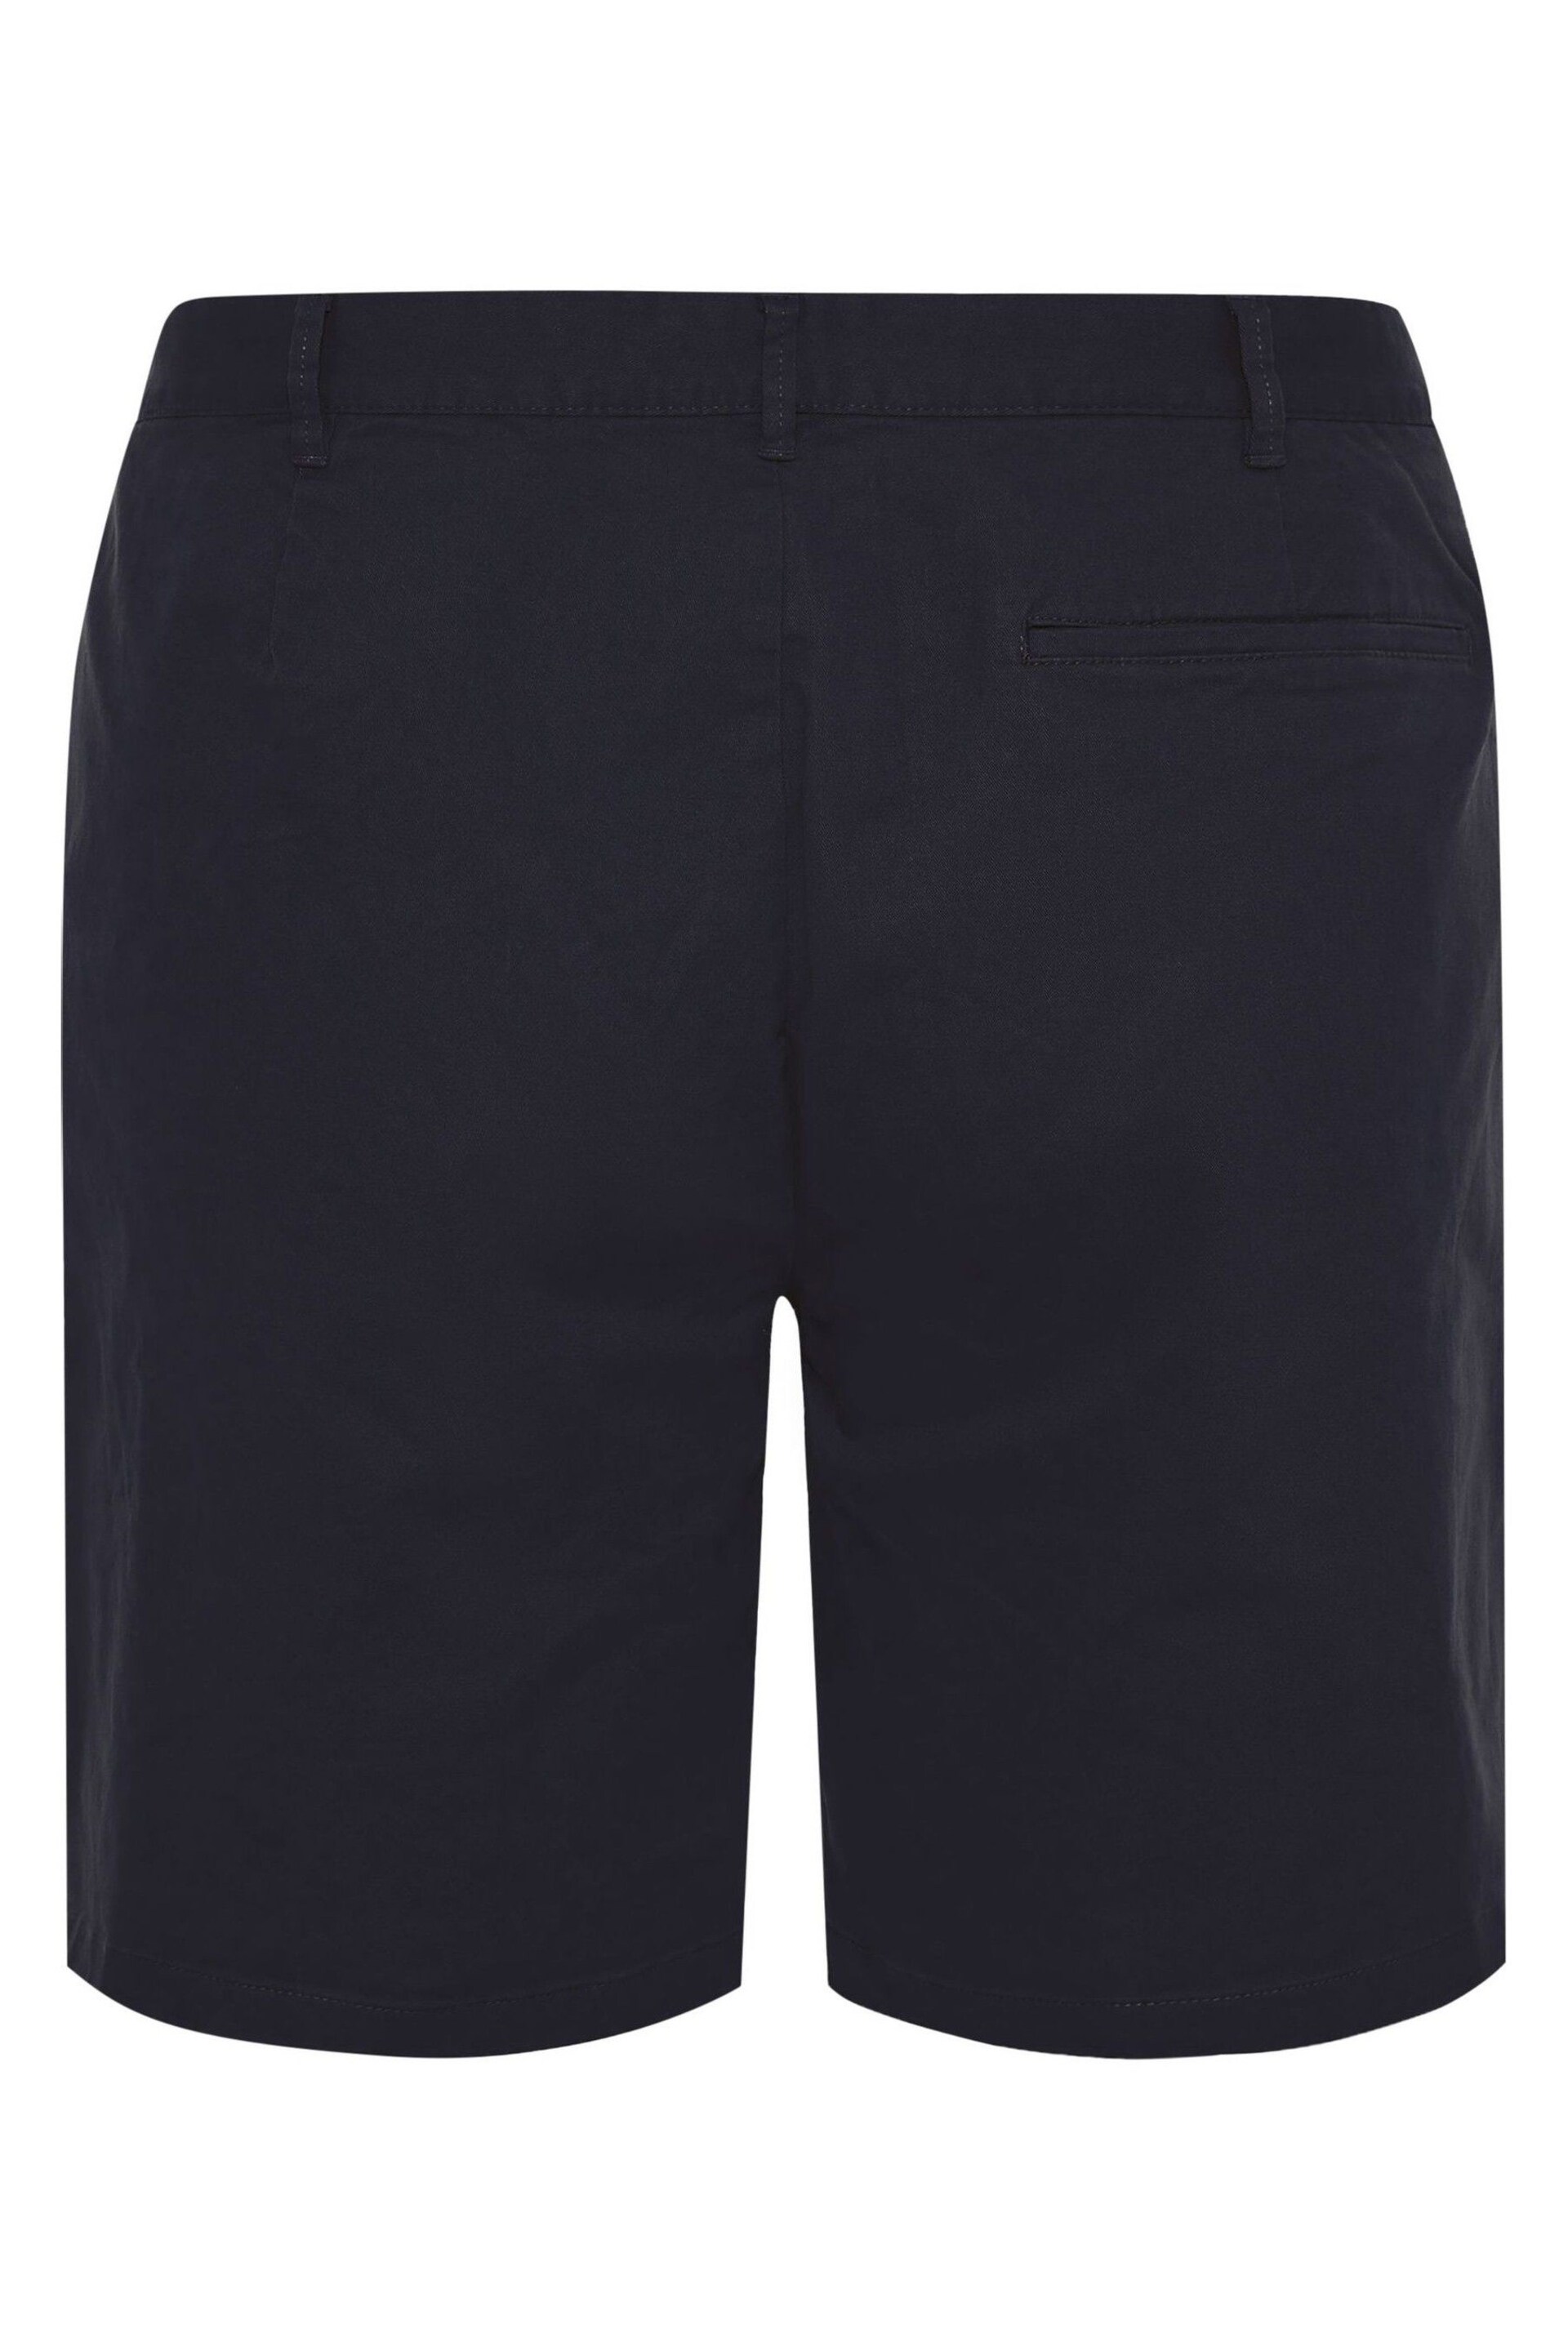 BadRhino Big & Tall Blue Stretch Chino Shorts - Image 5 of 5